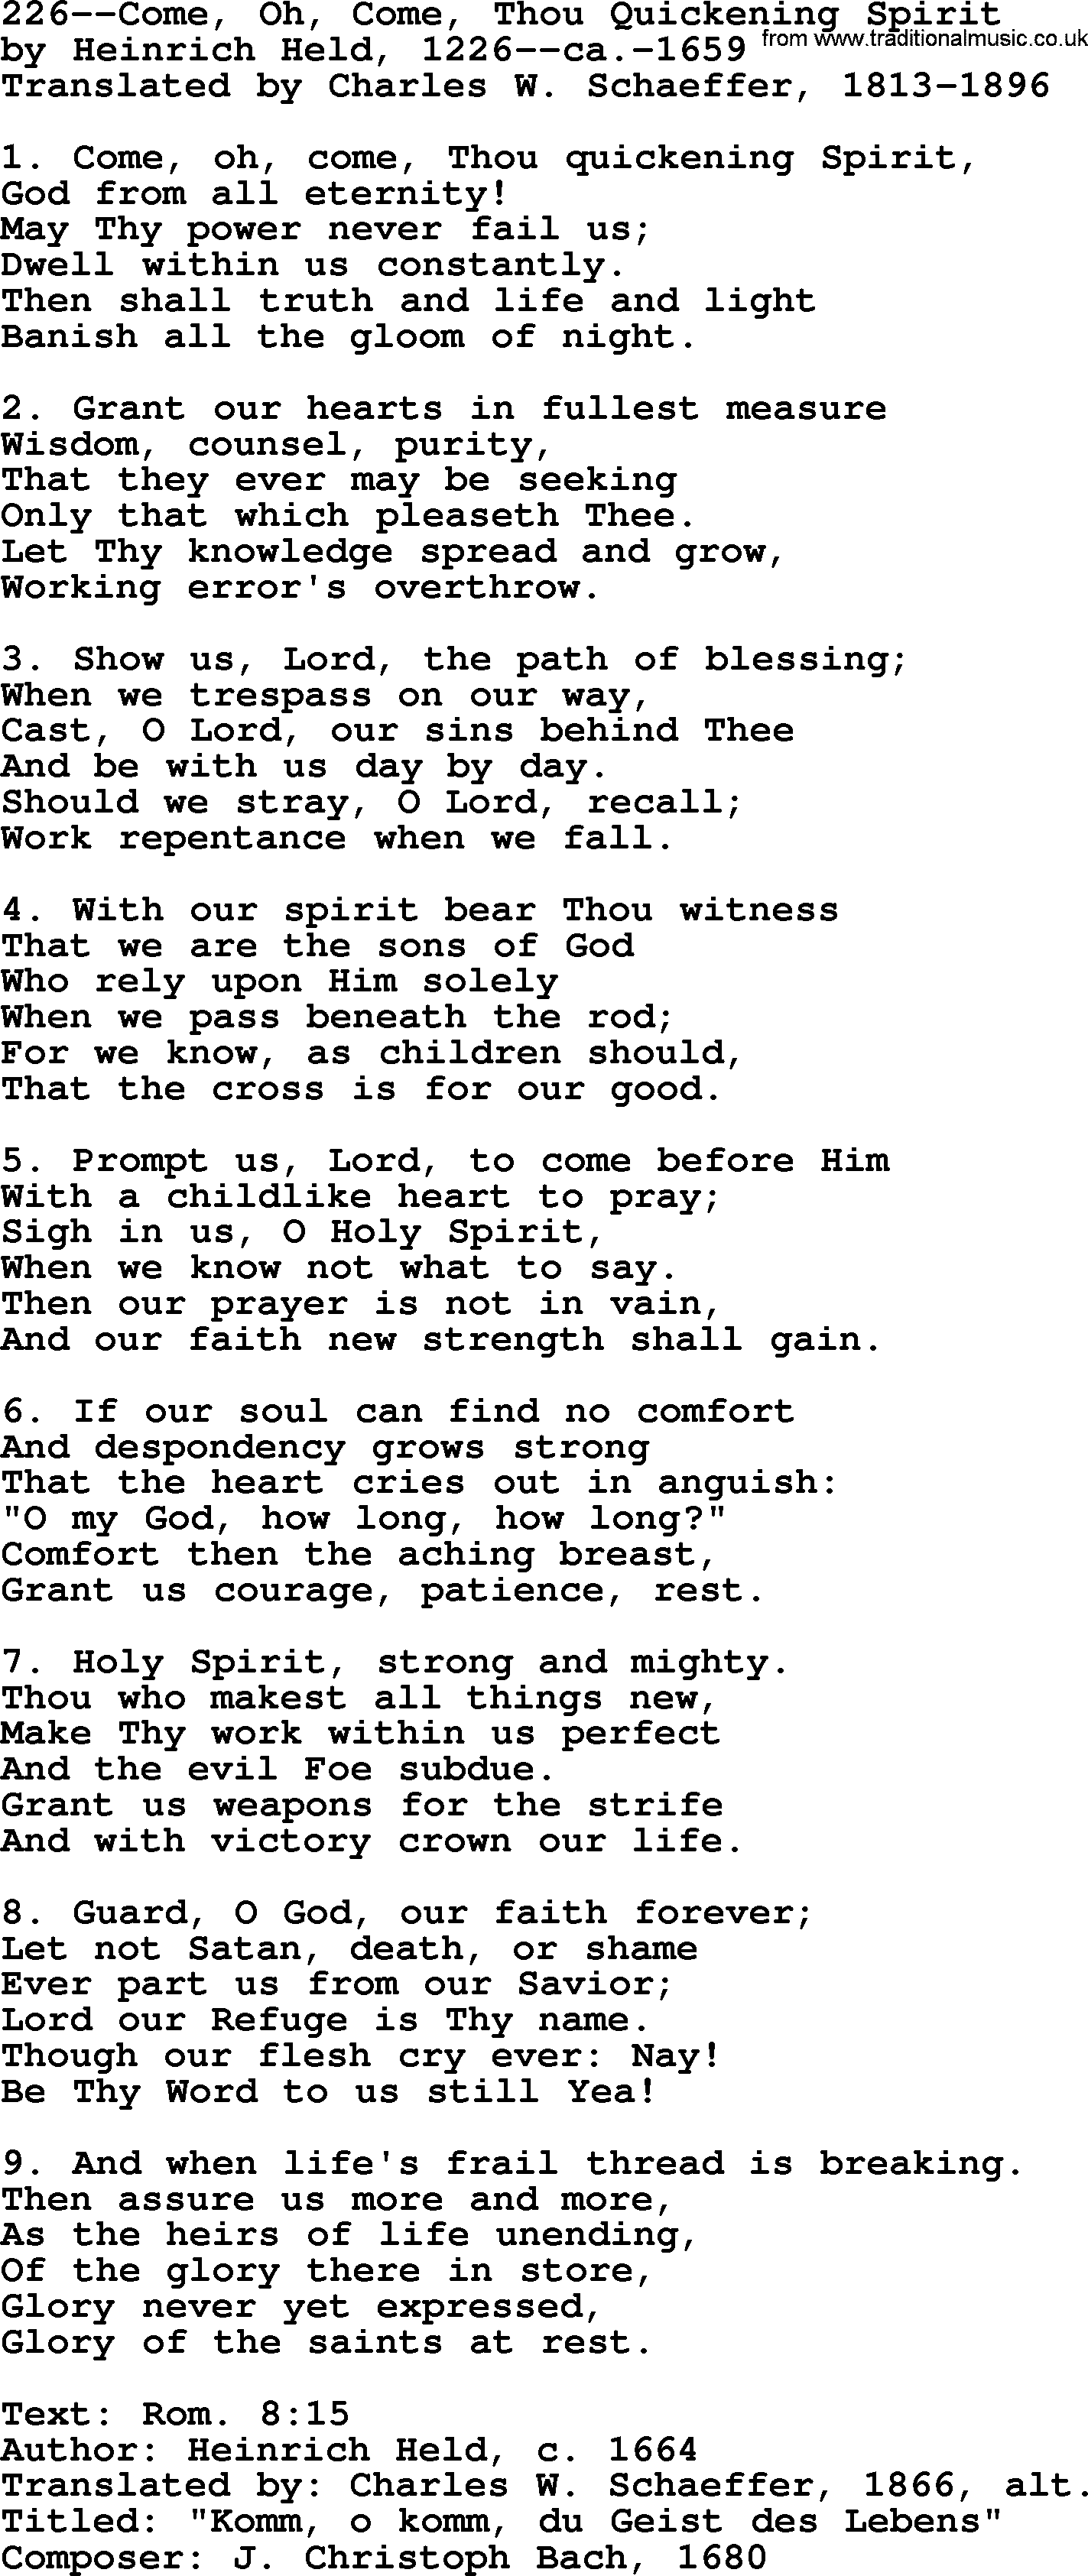 Lutheran Hymn: 226--Come, Oh, Come, Thou Quickening Spirit.txt lyrics with PDF